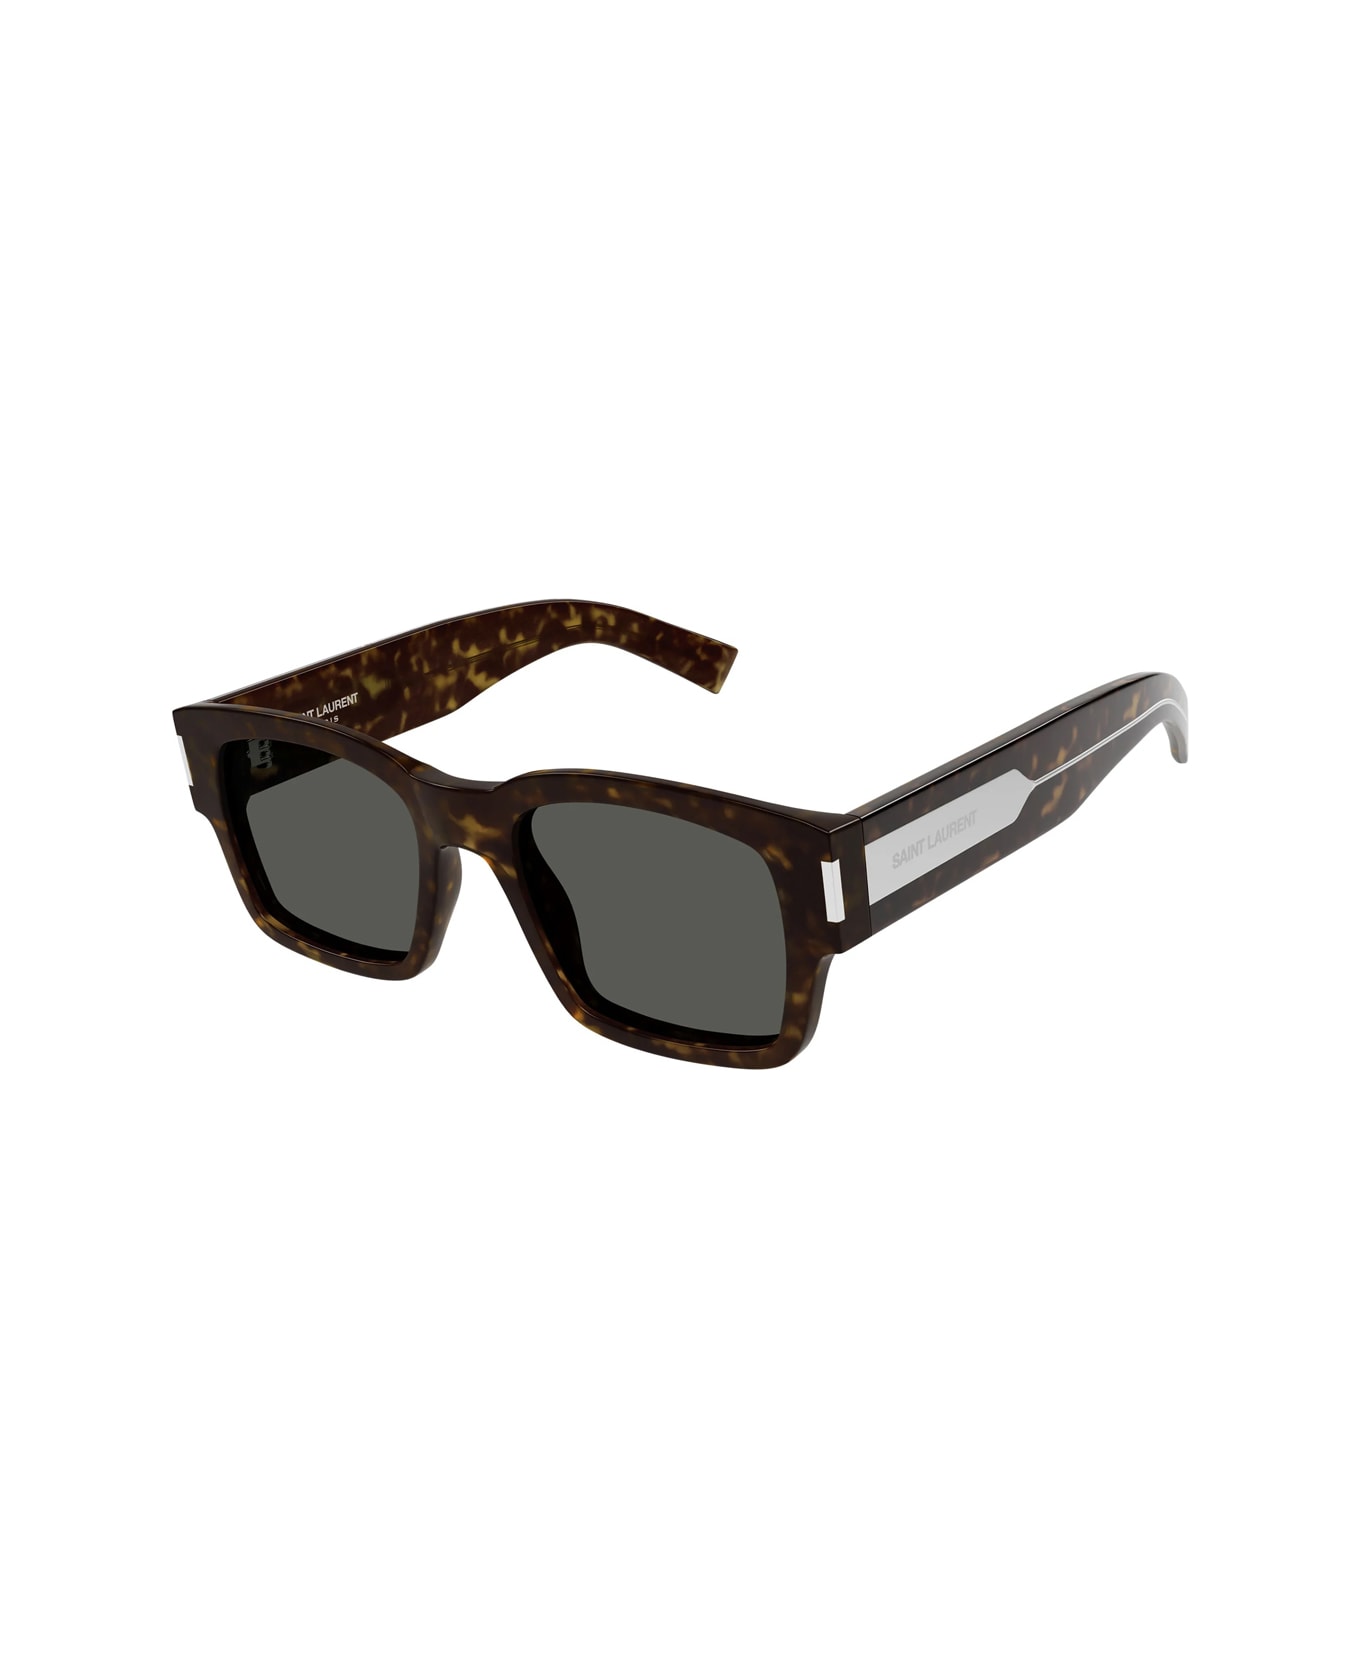 Saint Laurent Eyewear Sl 617 002 Sunglasses - Marrone